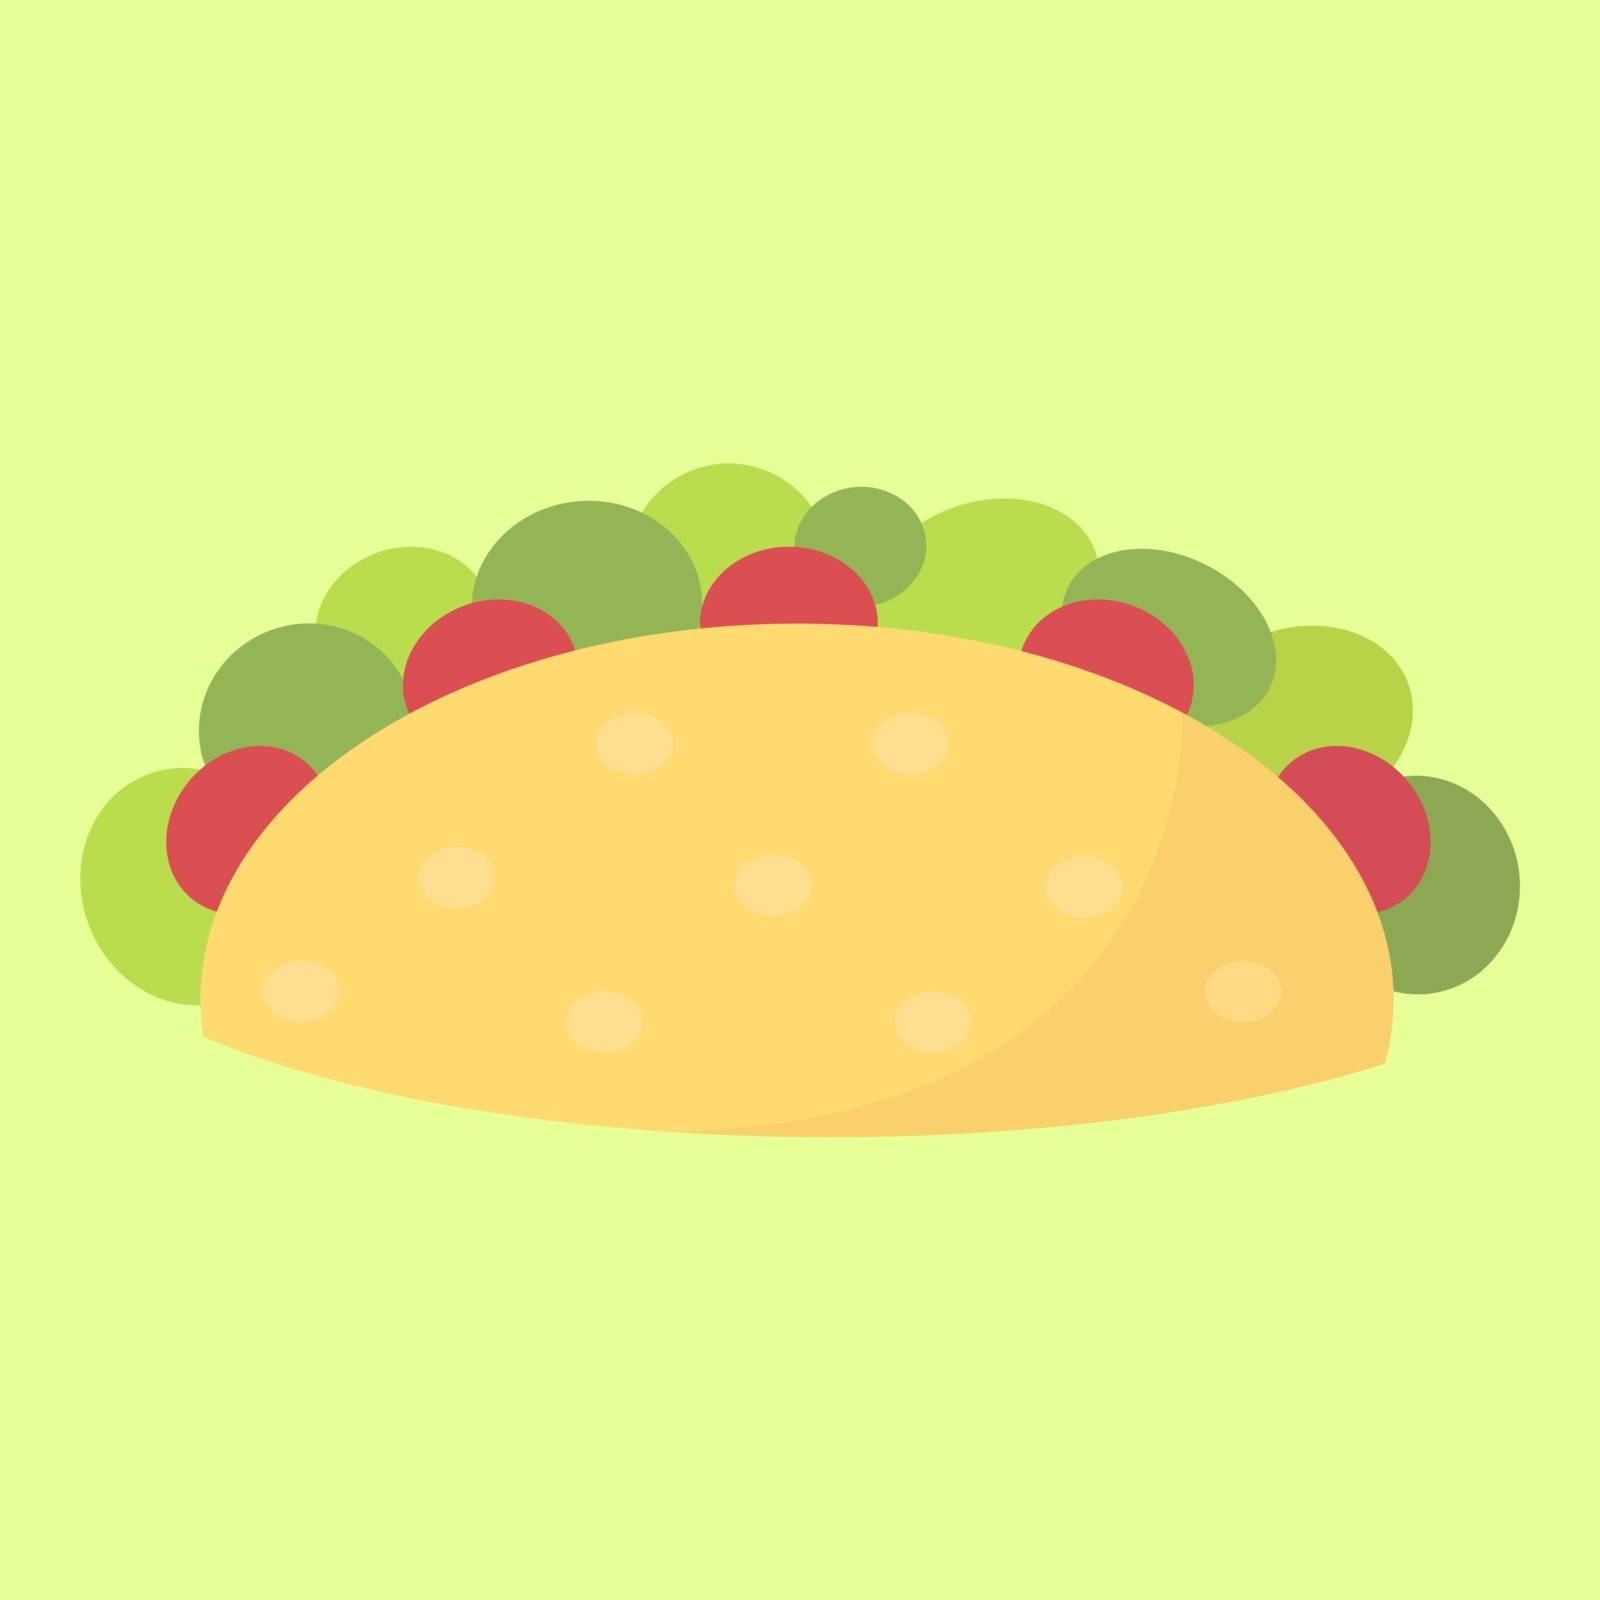 Tacos, illustration, vector on white background.